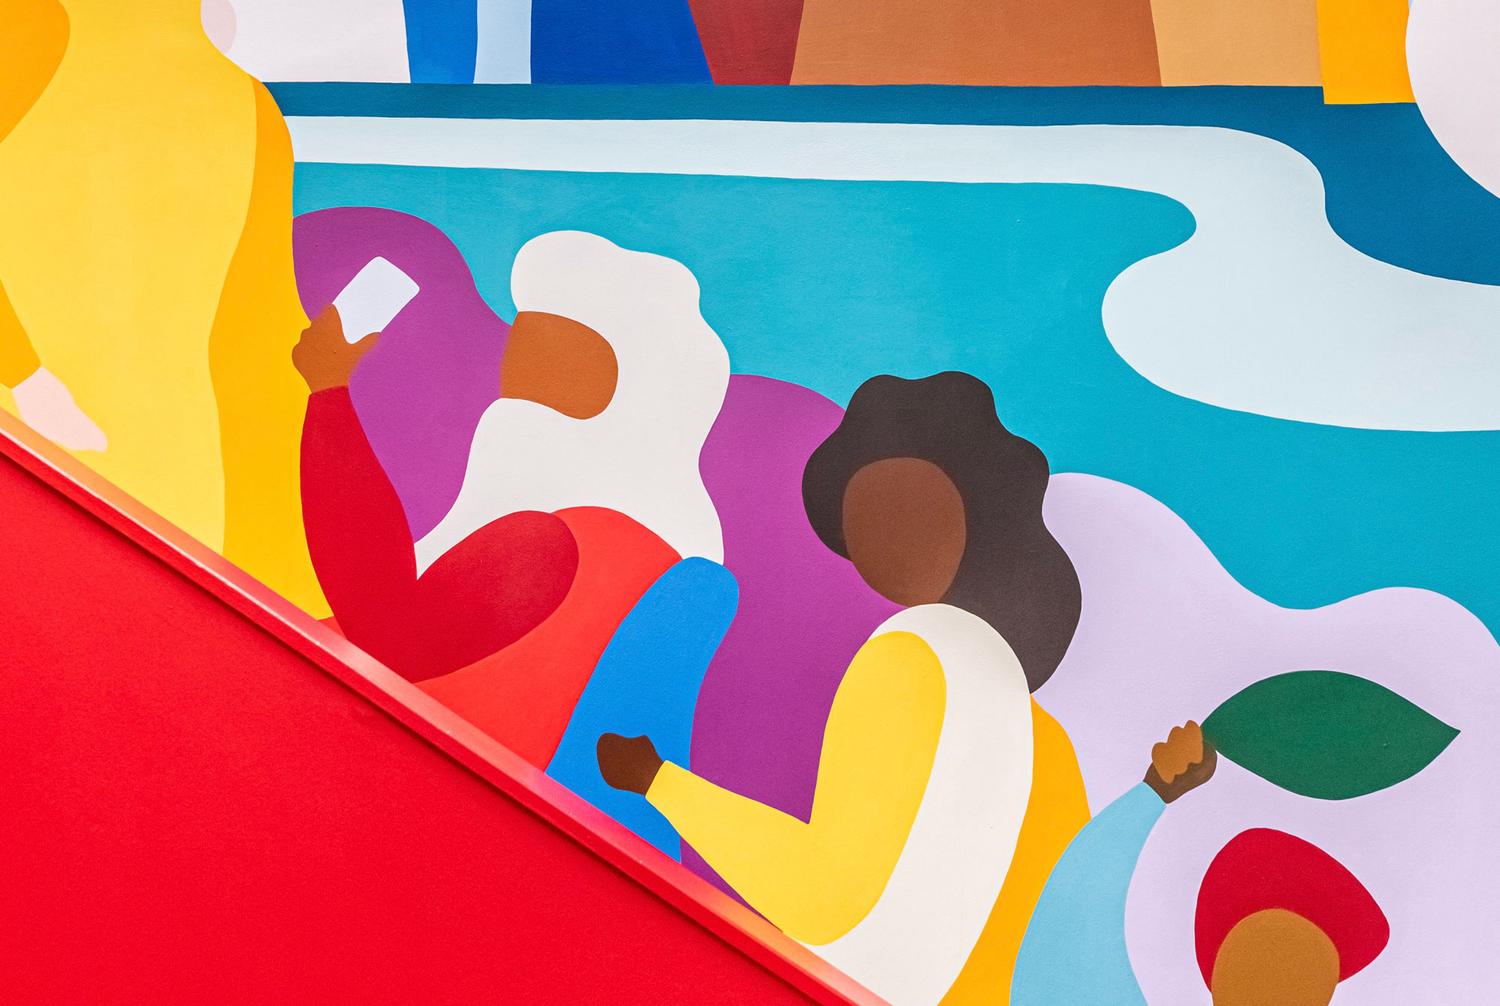 Detail of colorful mural